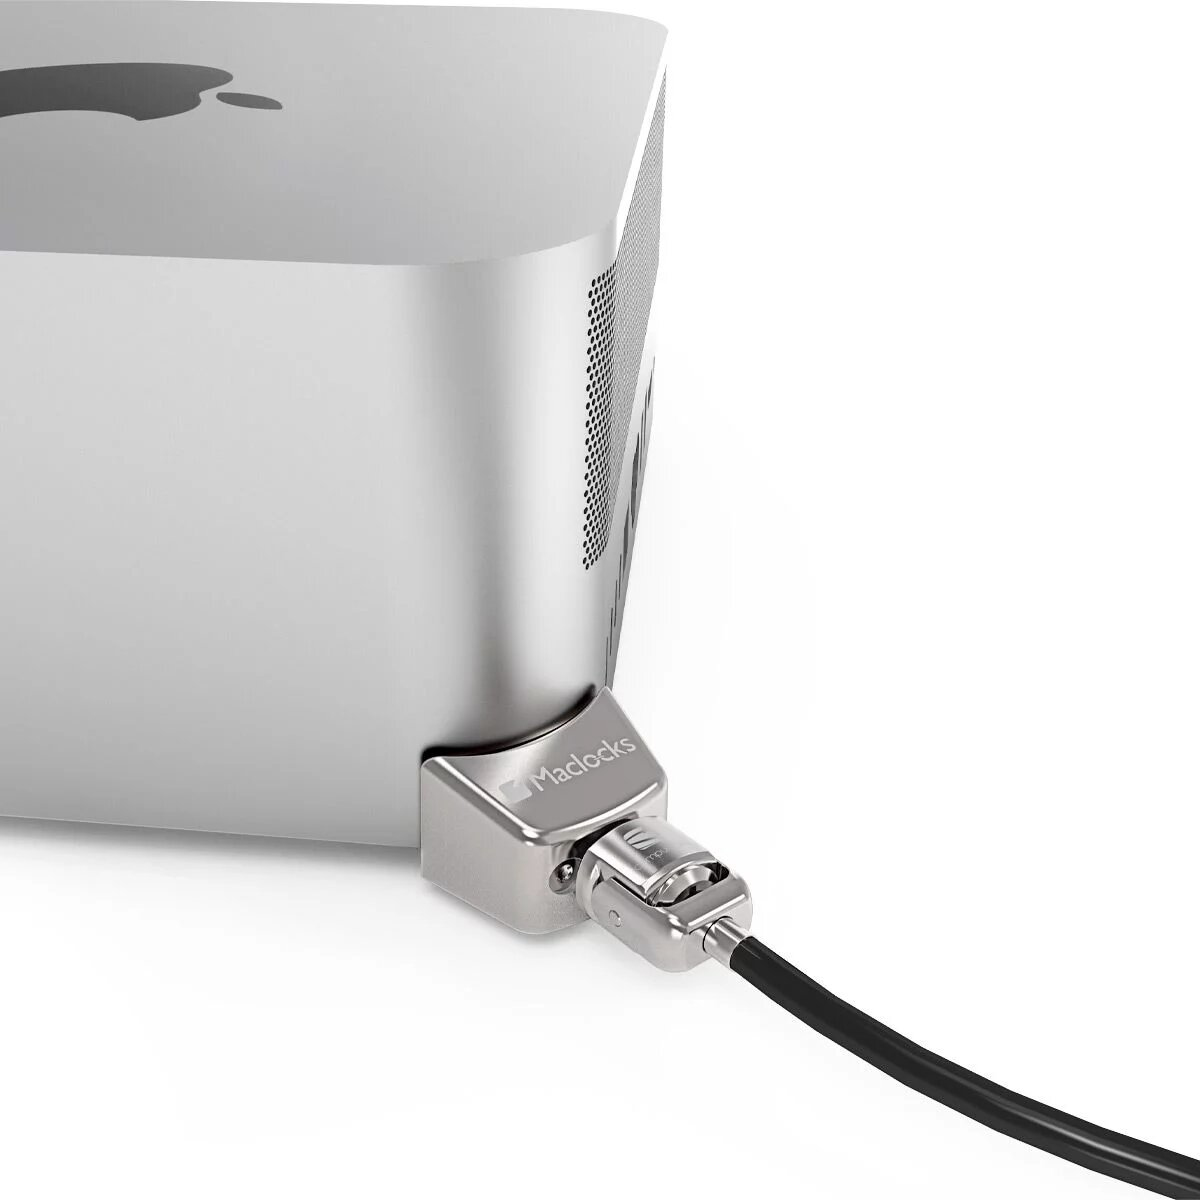 MSLDG01KL MACLOCKS Mac Studio Ledge Lock Adapter with Keyed Cable Lock - Security lock - for Apple Mac Studio